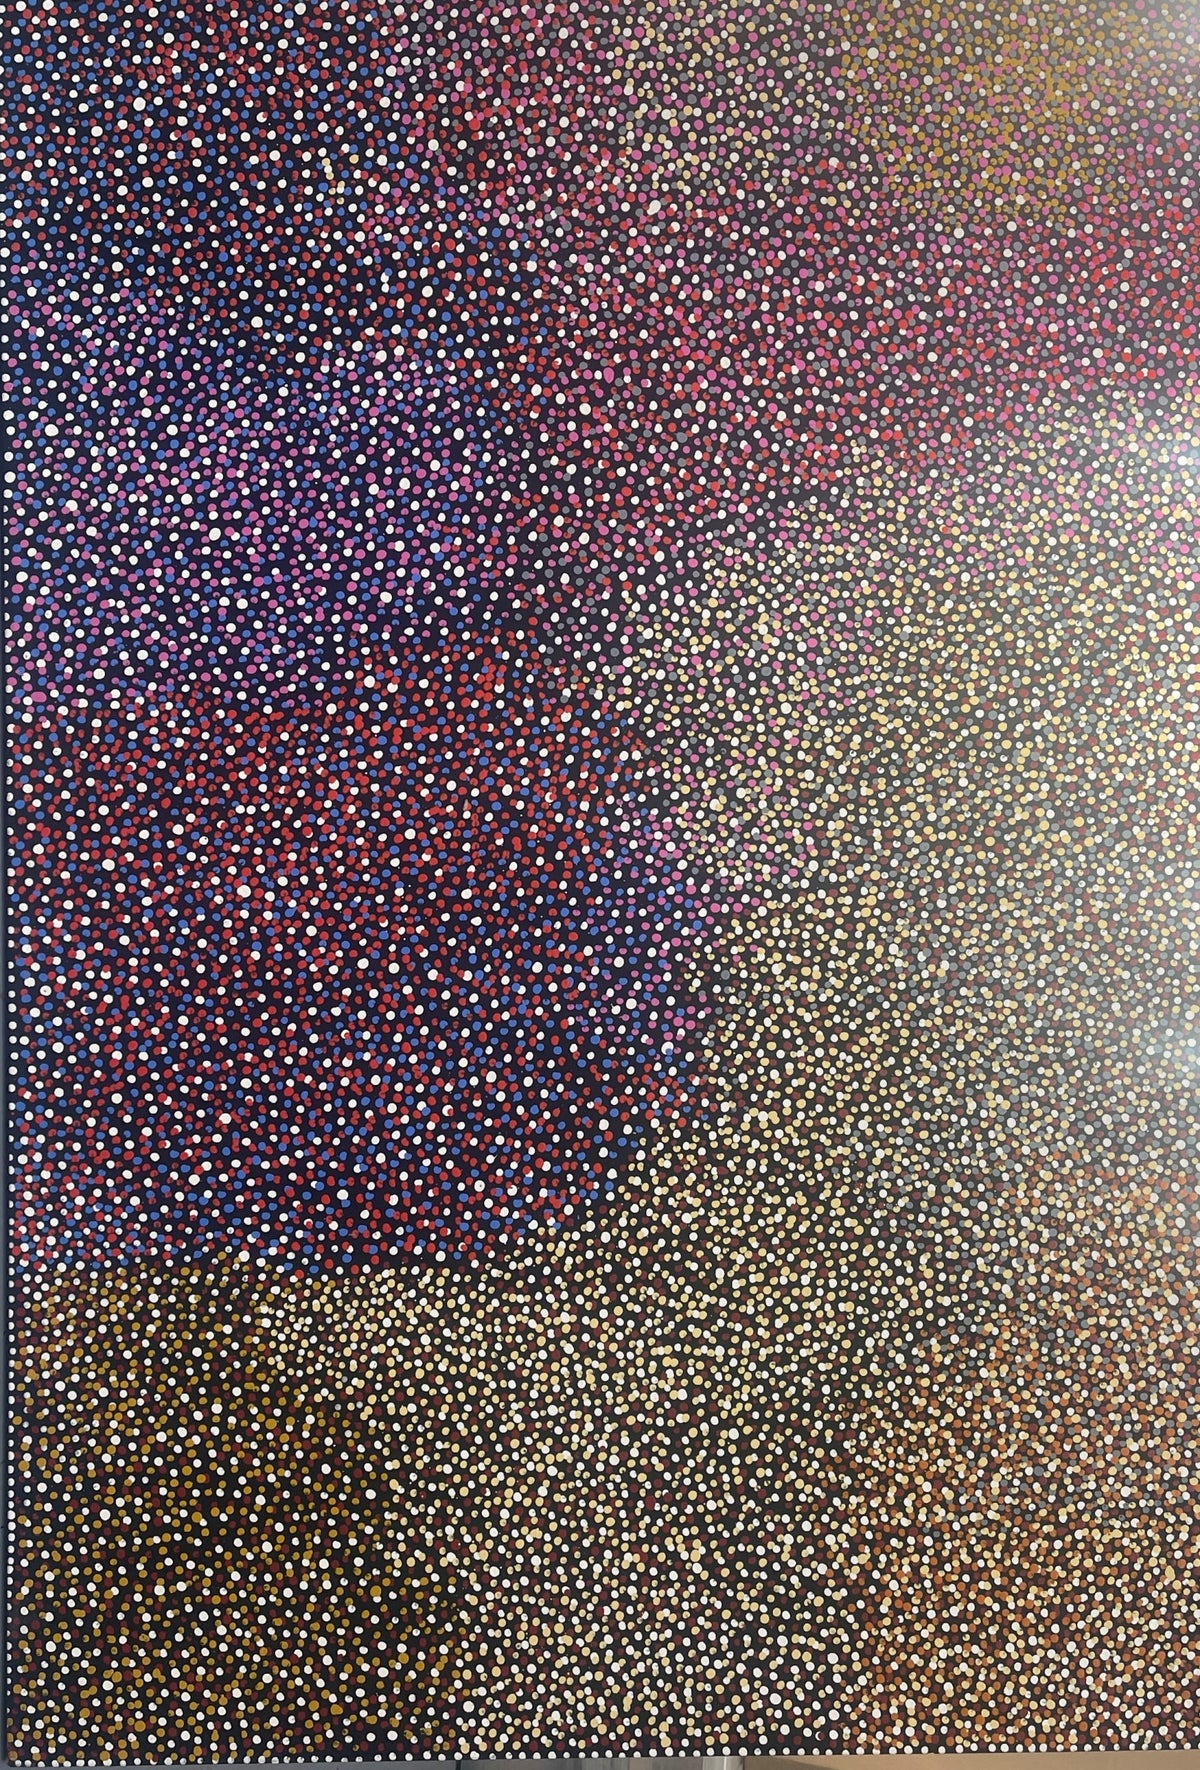 Gloria Petyarre Aboriginal Artist Australia